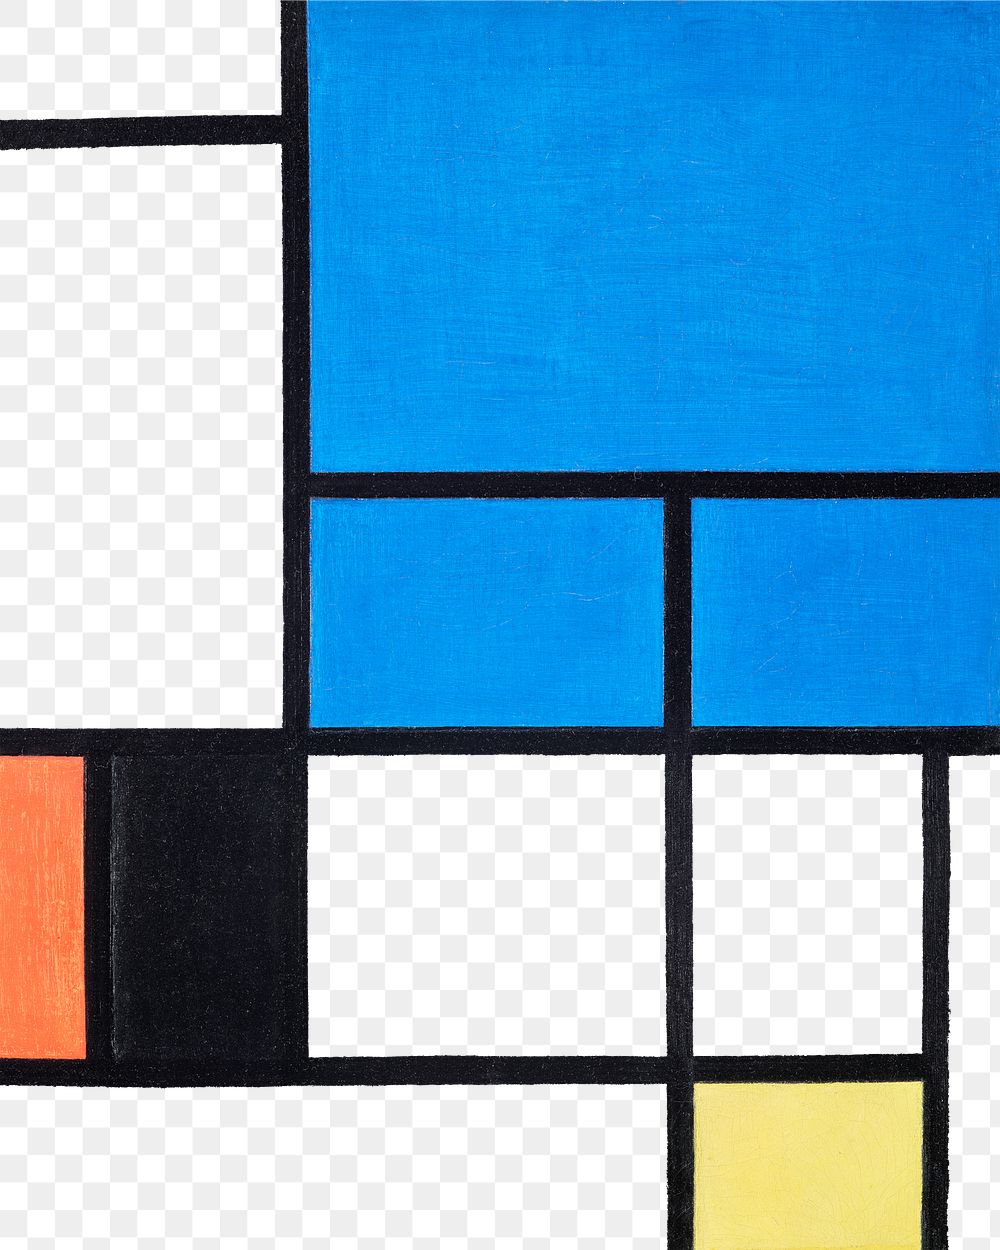 Png Mondrian&rsquo;s Composition, Cubism art, transparent background.   Remixed by rawpixel.